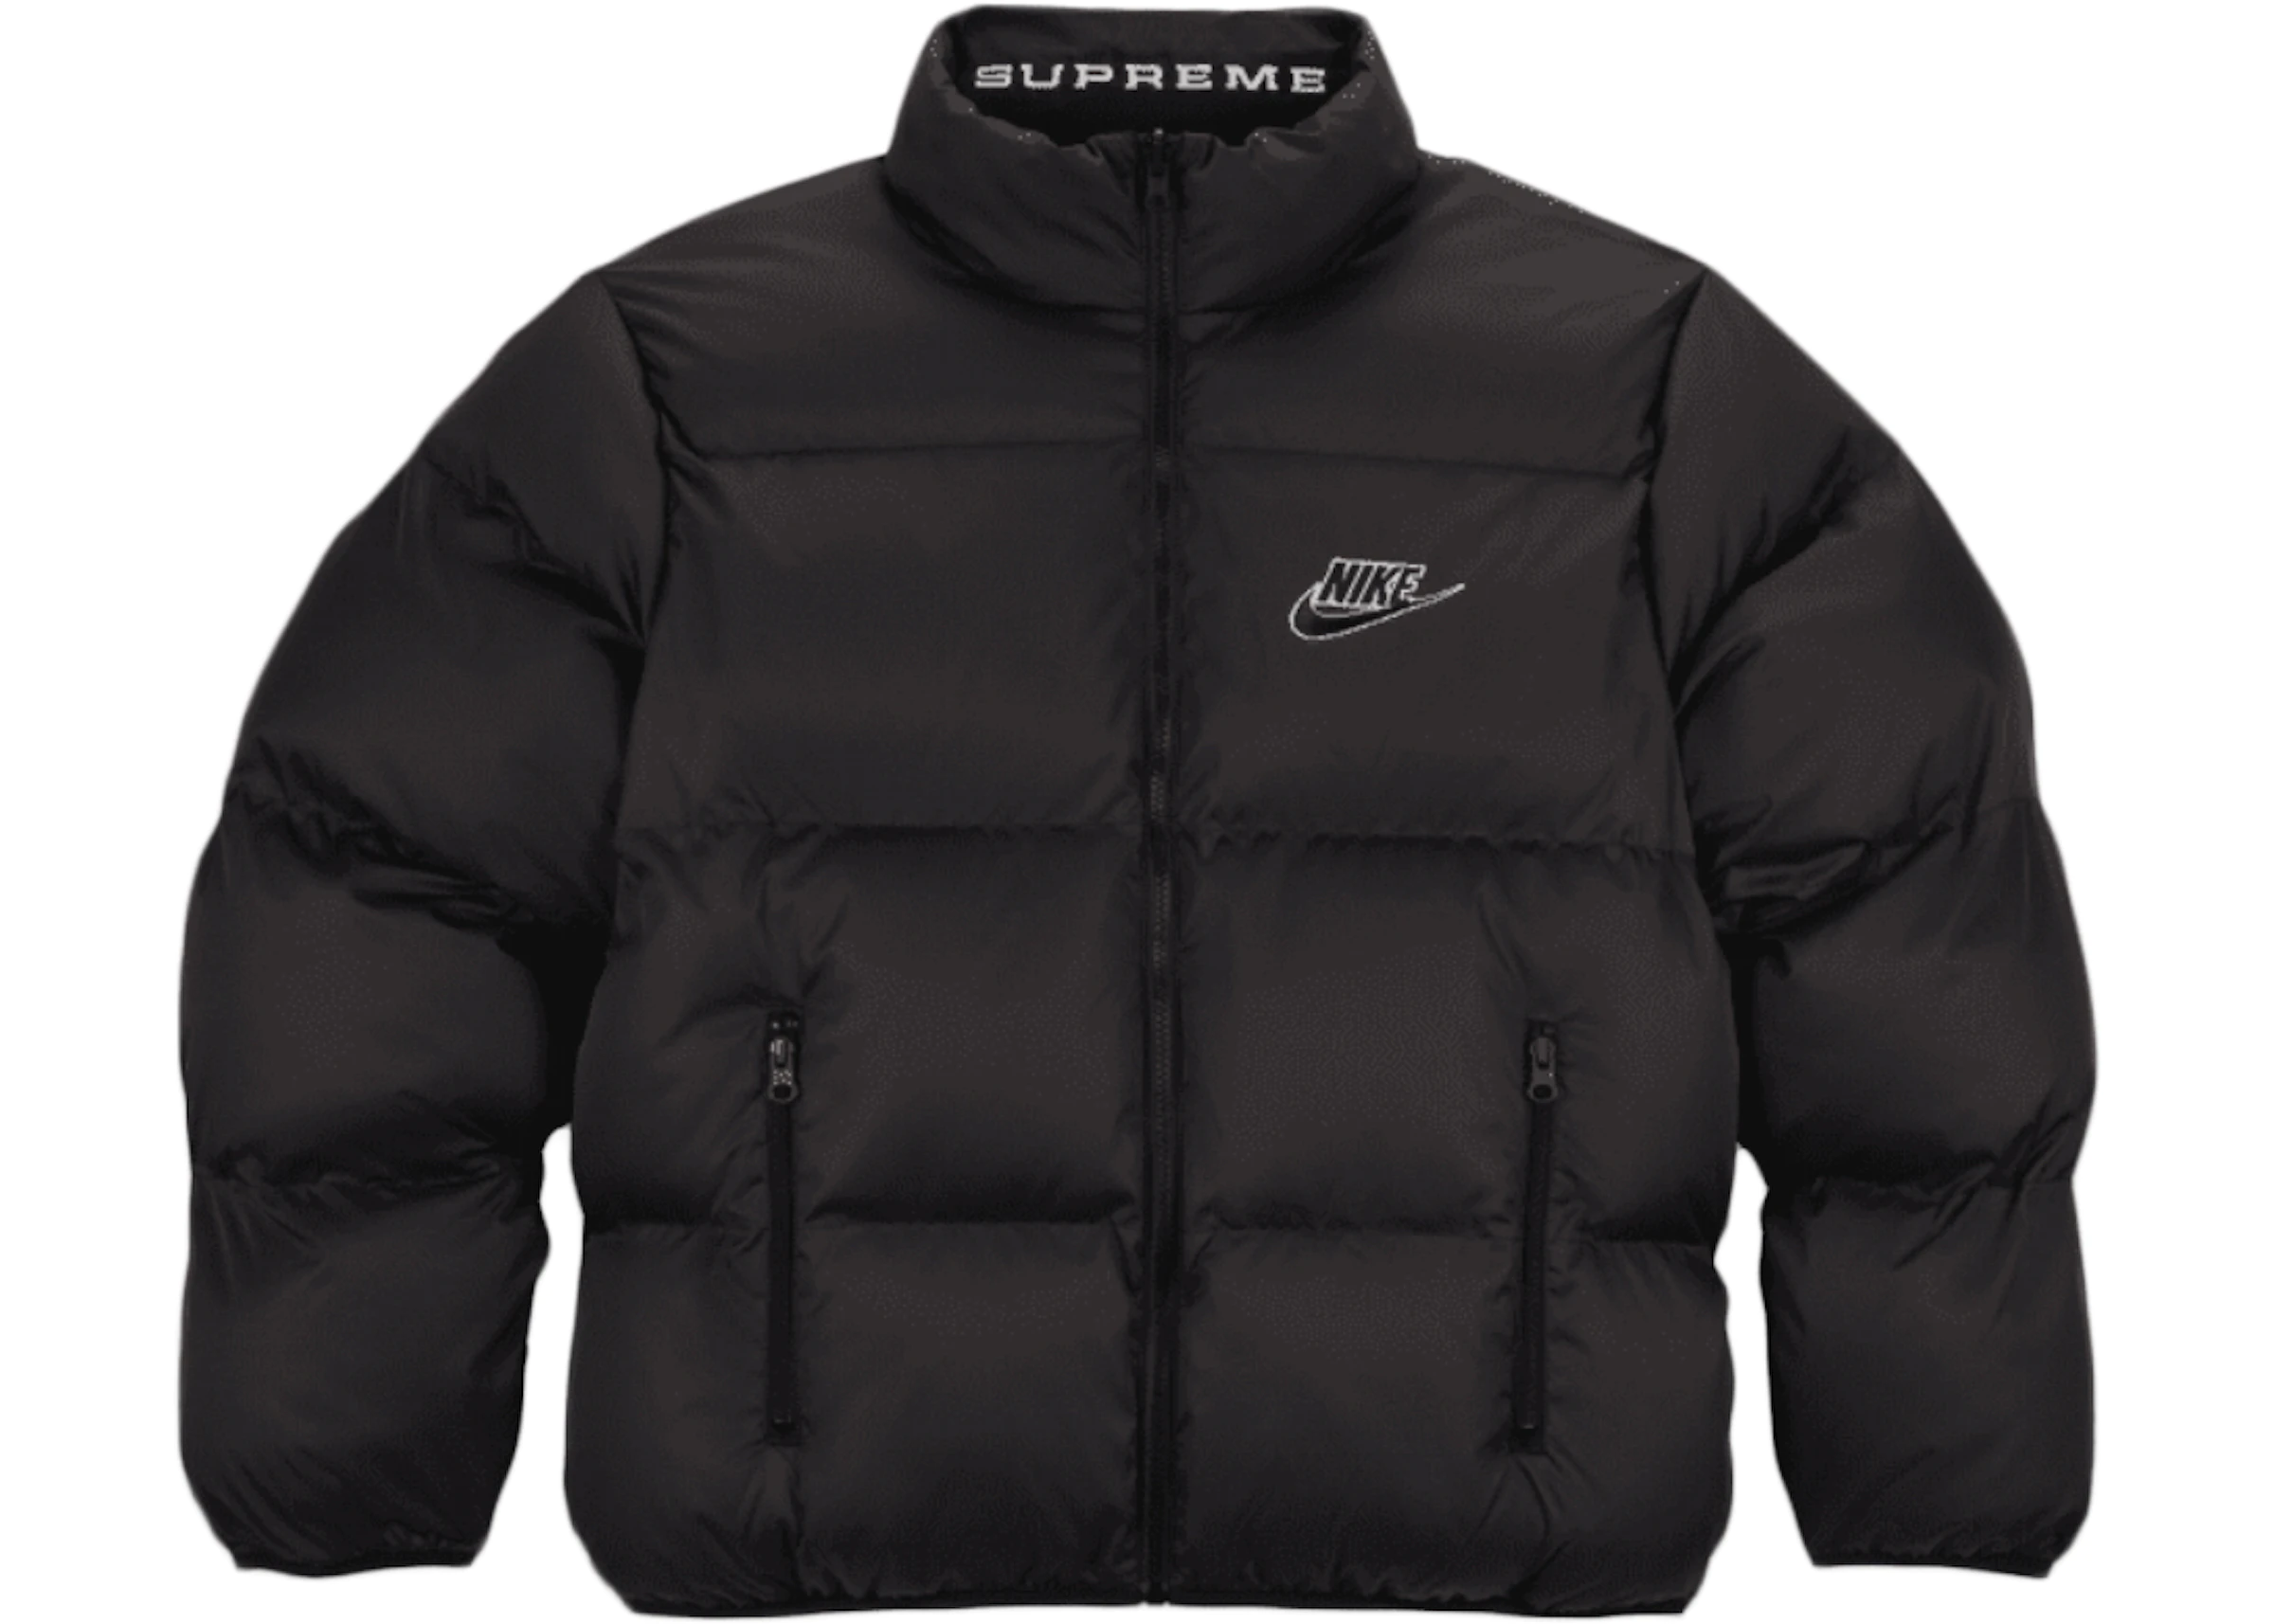 dennenboom Ventileren delicaat Supreme Nike Reversible Puffy Jacket Black - SS21 - US